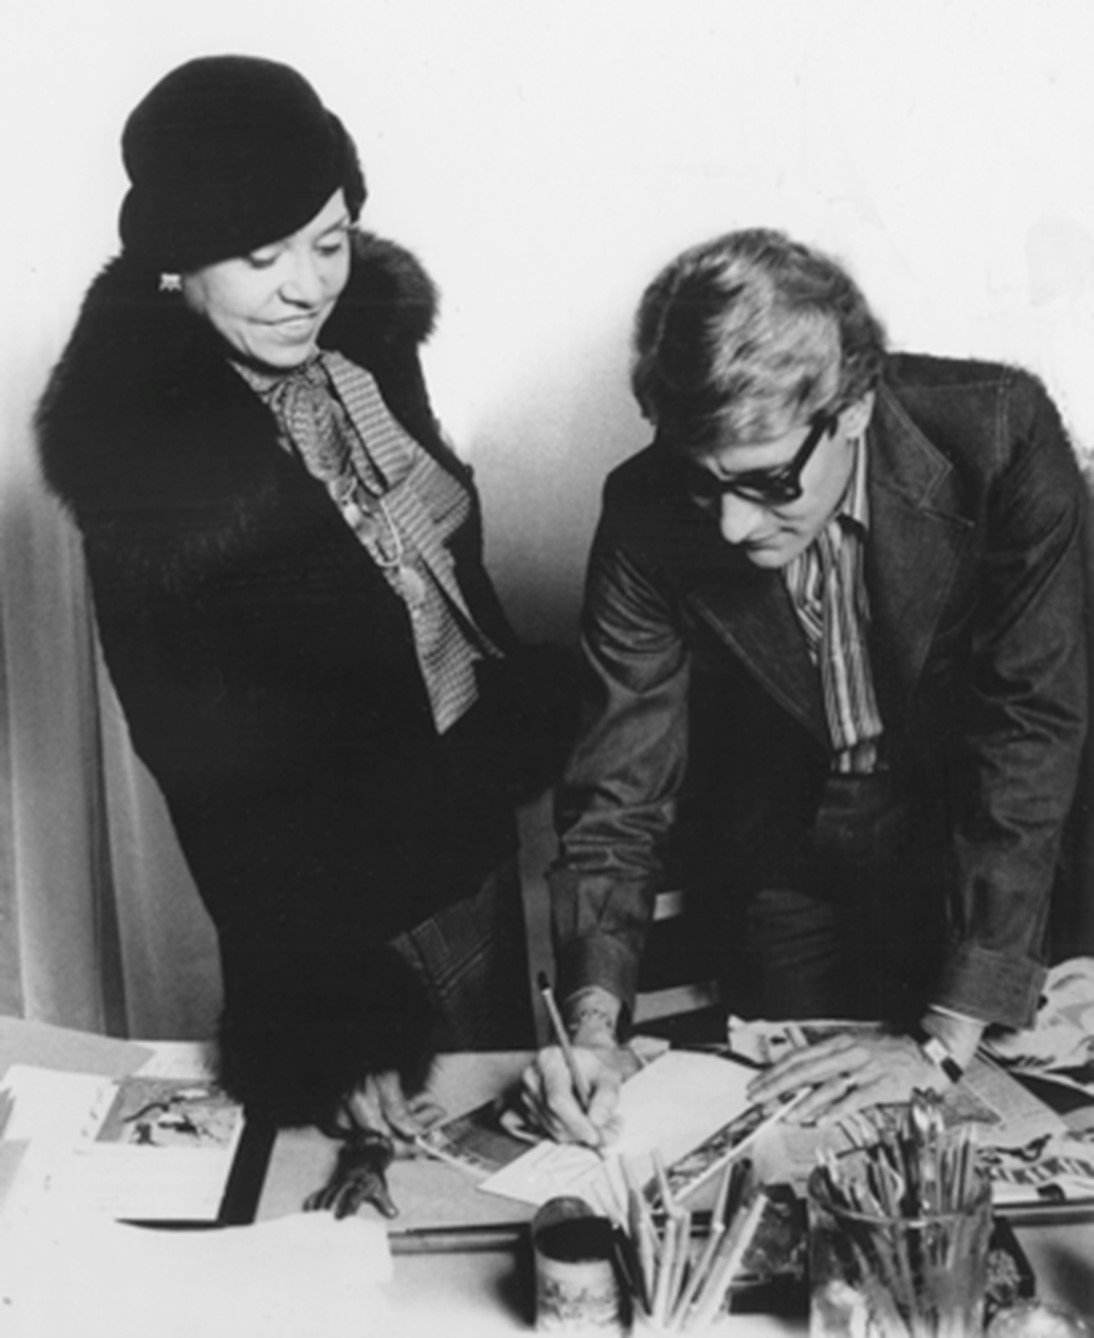 eunicejohnson with Yves Saint Laurent 1973